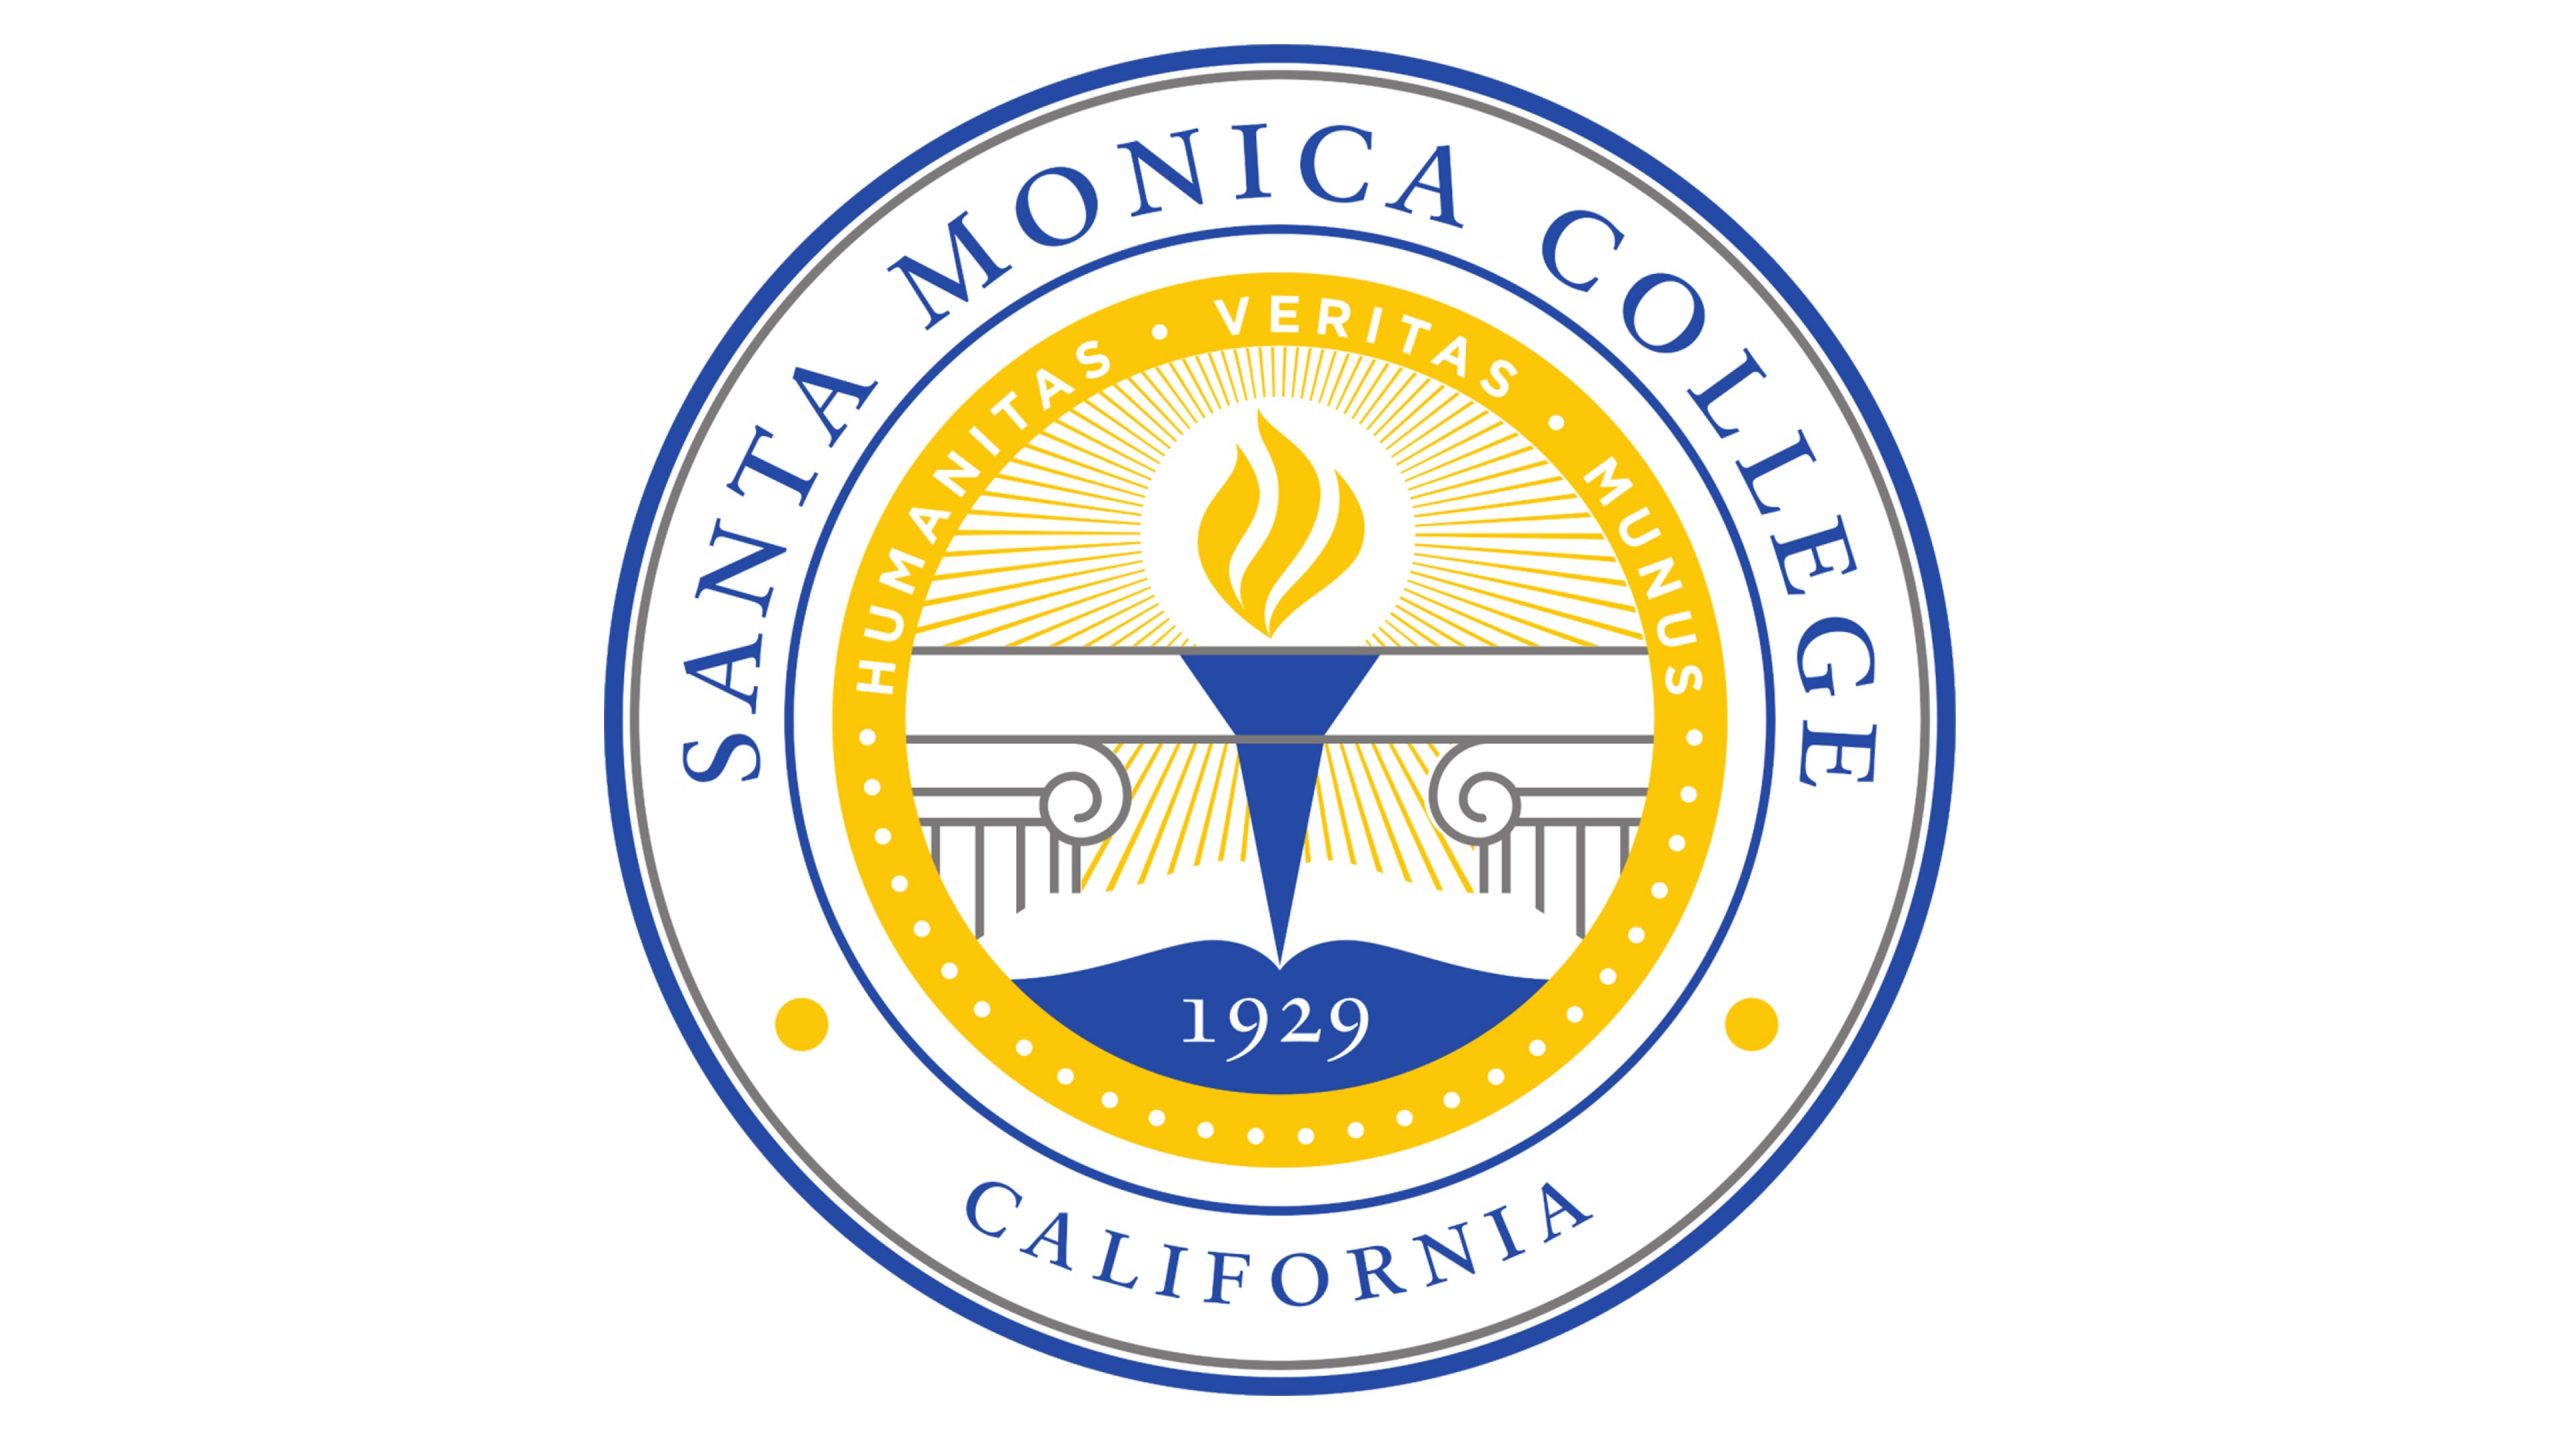 Santa Monica College Copy Scaled 